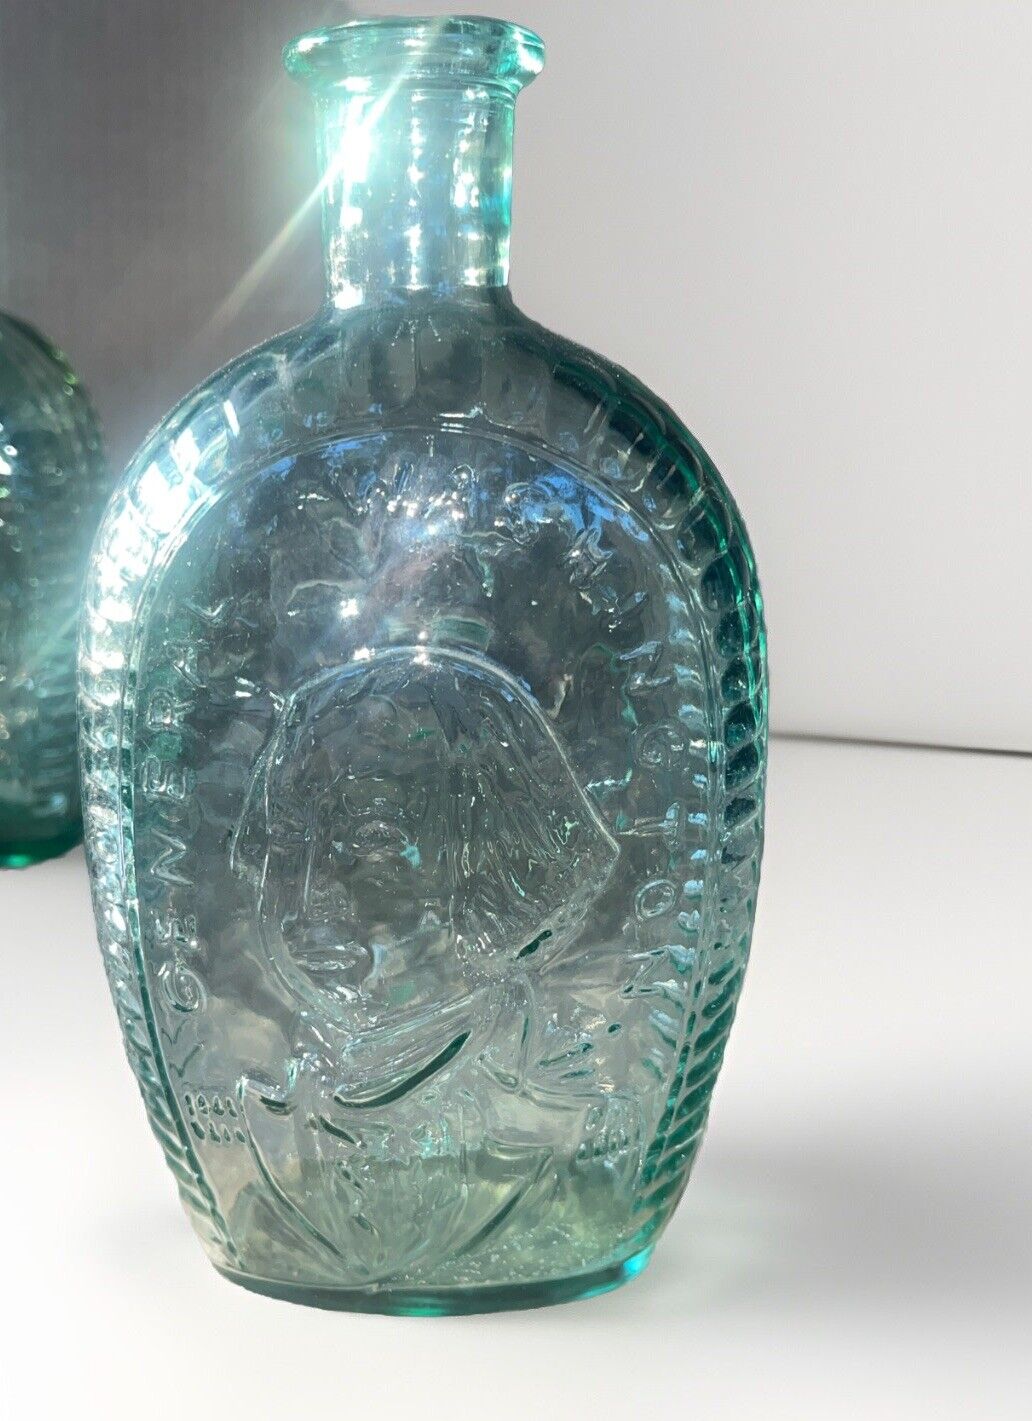 VTG Lestoil Glass Bottle General George Washington Eagle Flask Decanter Aqua